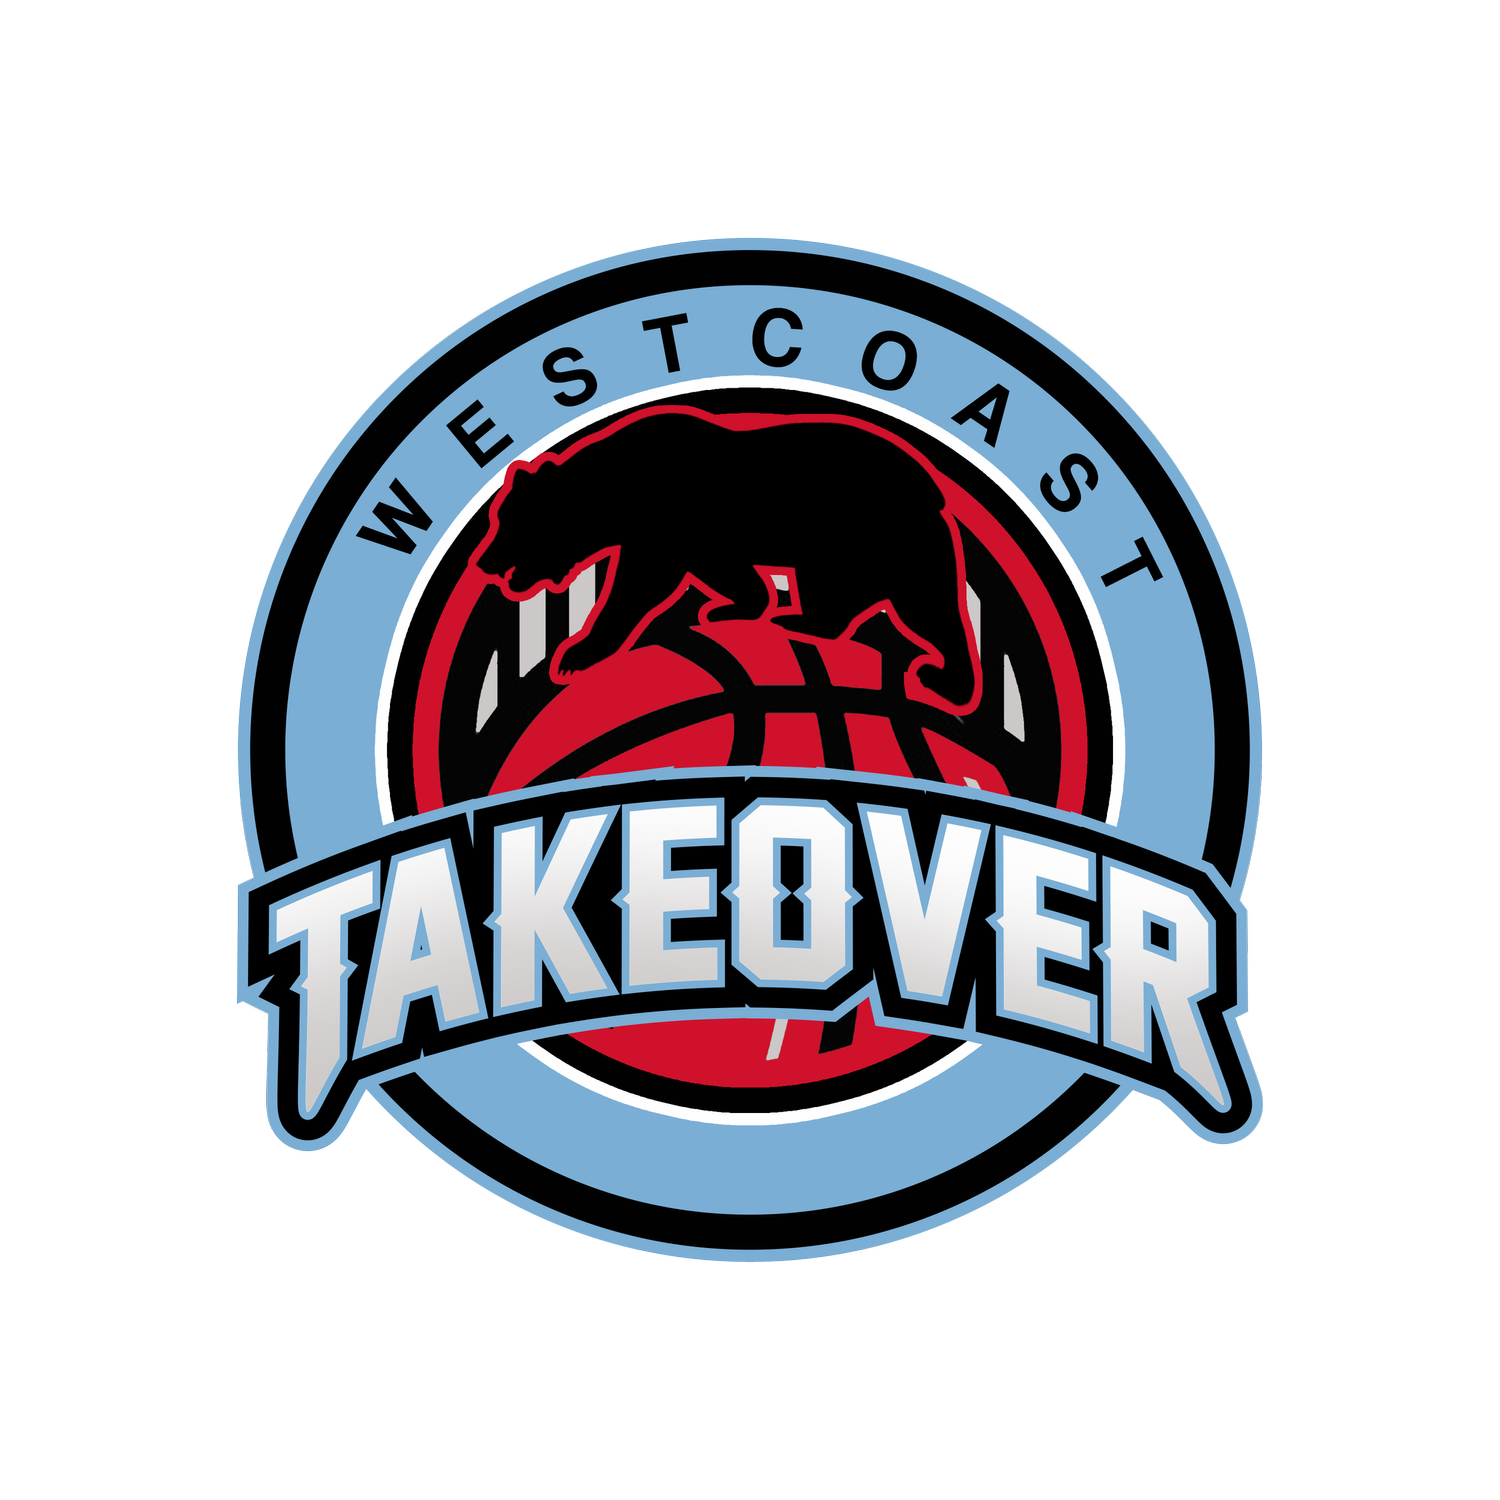 Westcoast Takeover